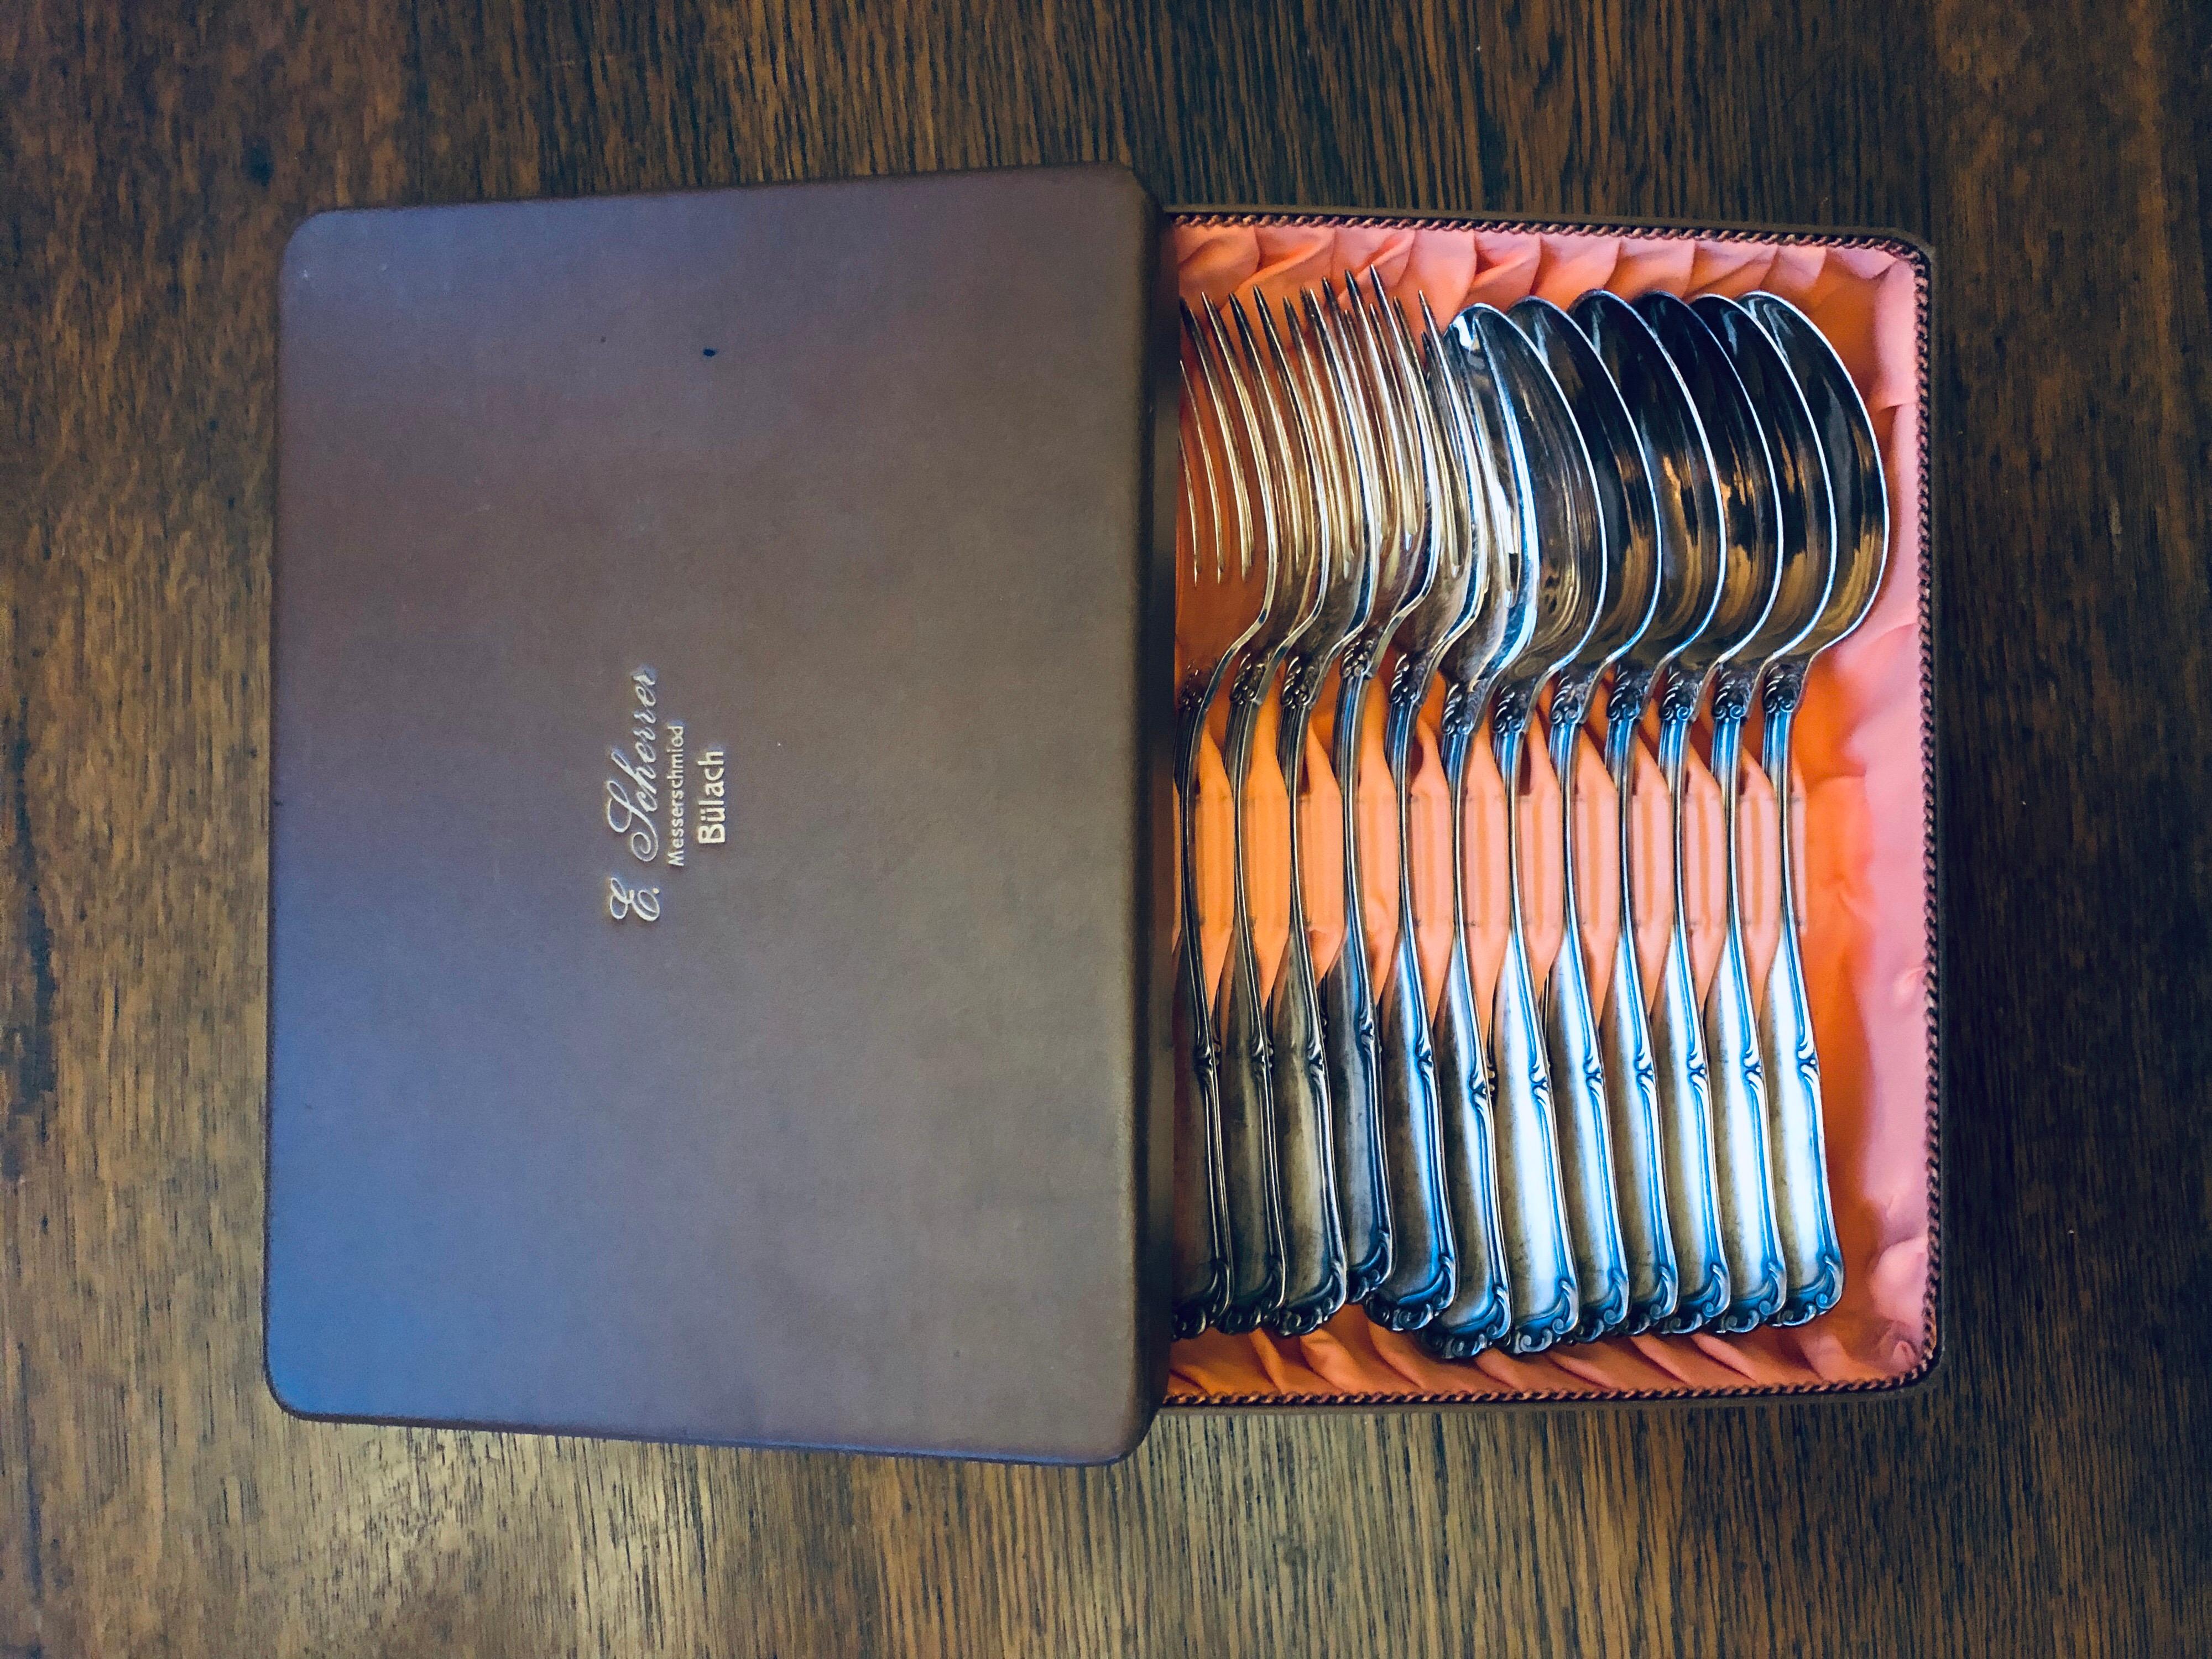 ON SALE 
E.Icherrer Messerschmied Bulach flatware silver set of 12 spoons forks in an original box.